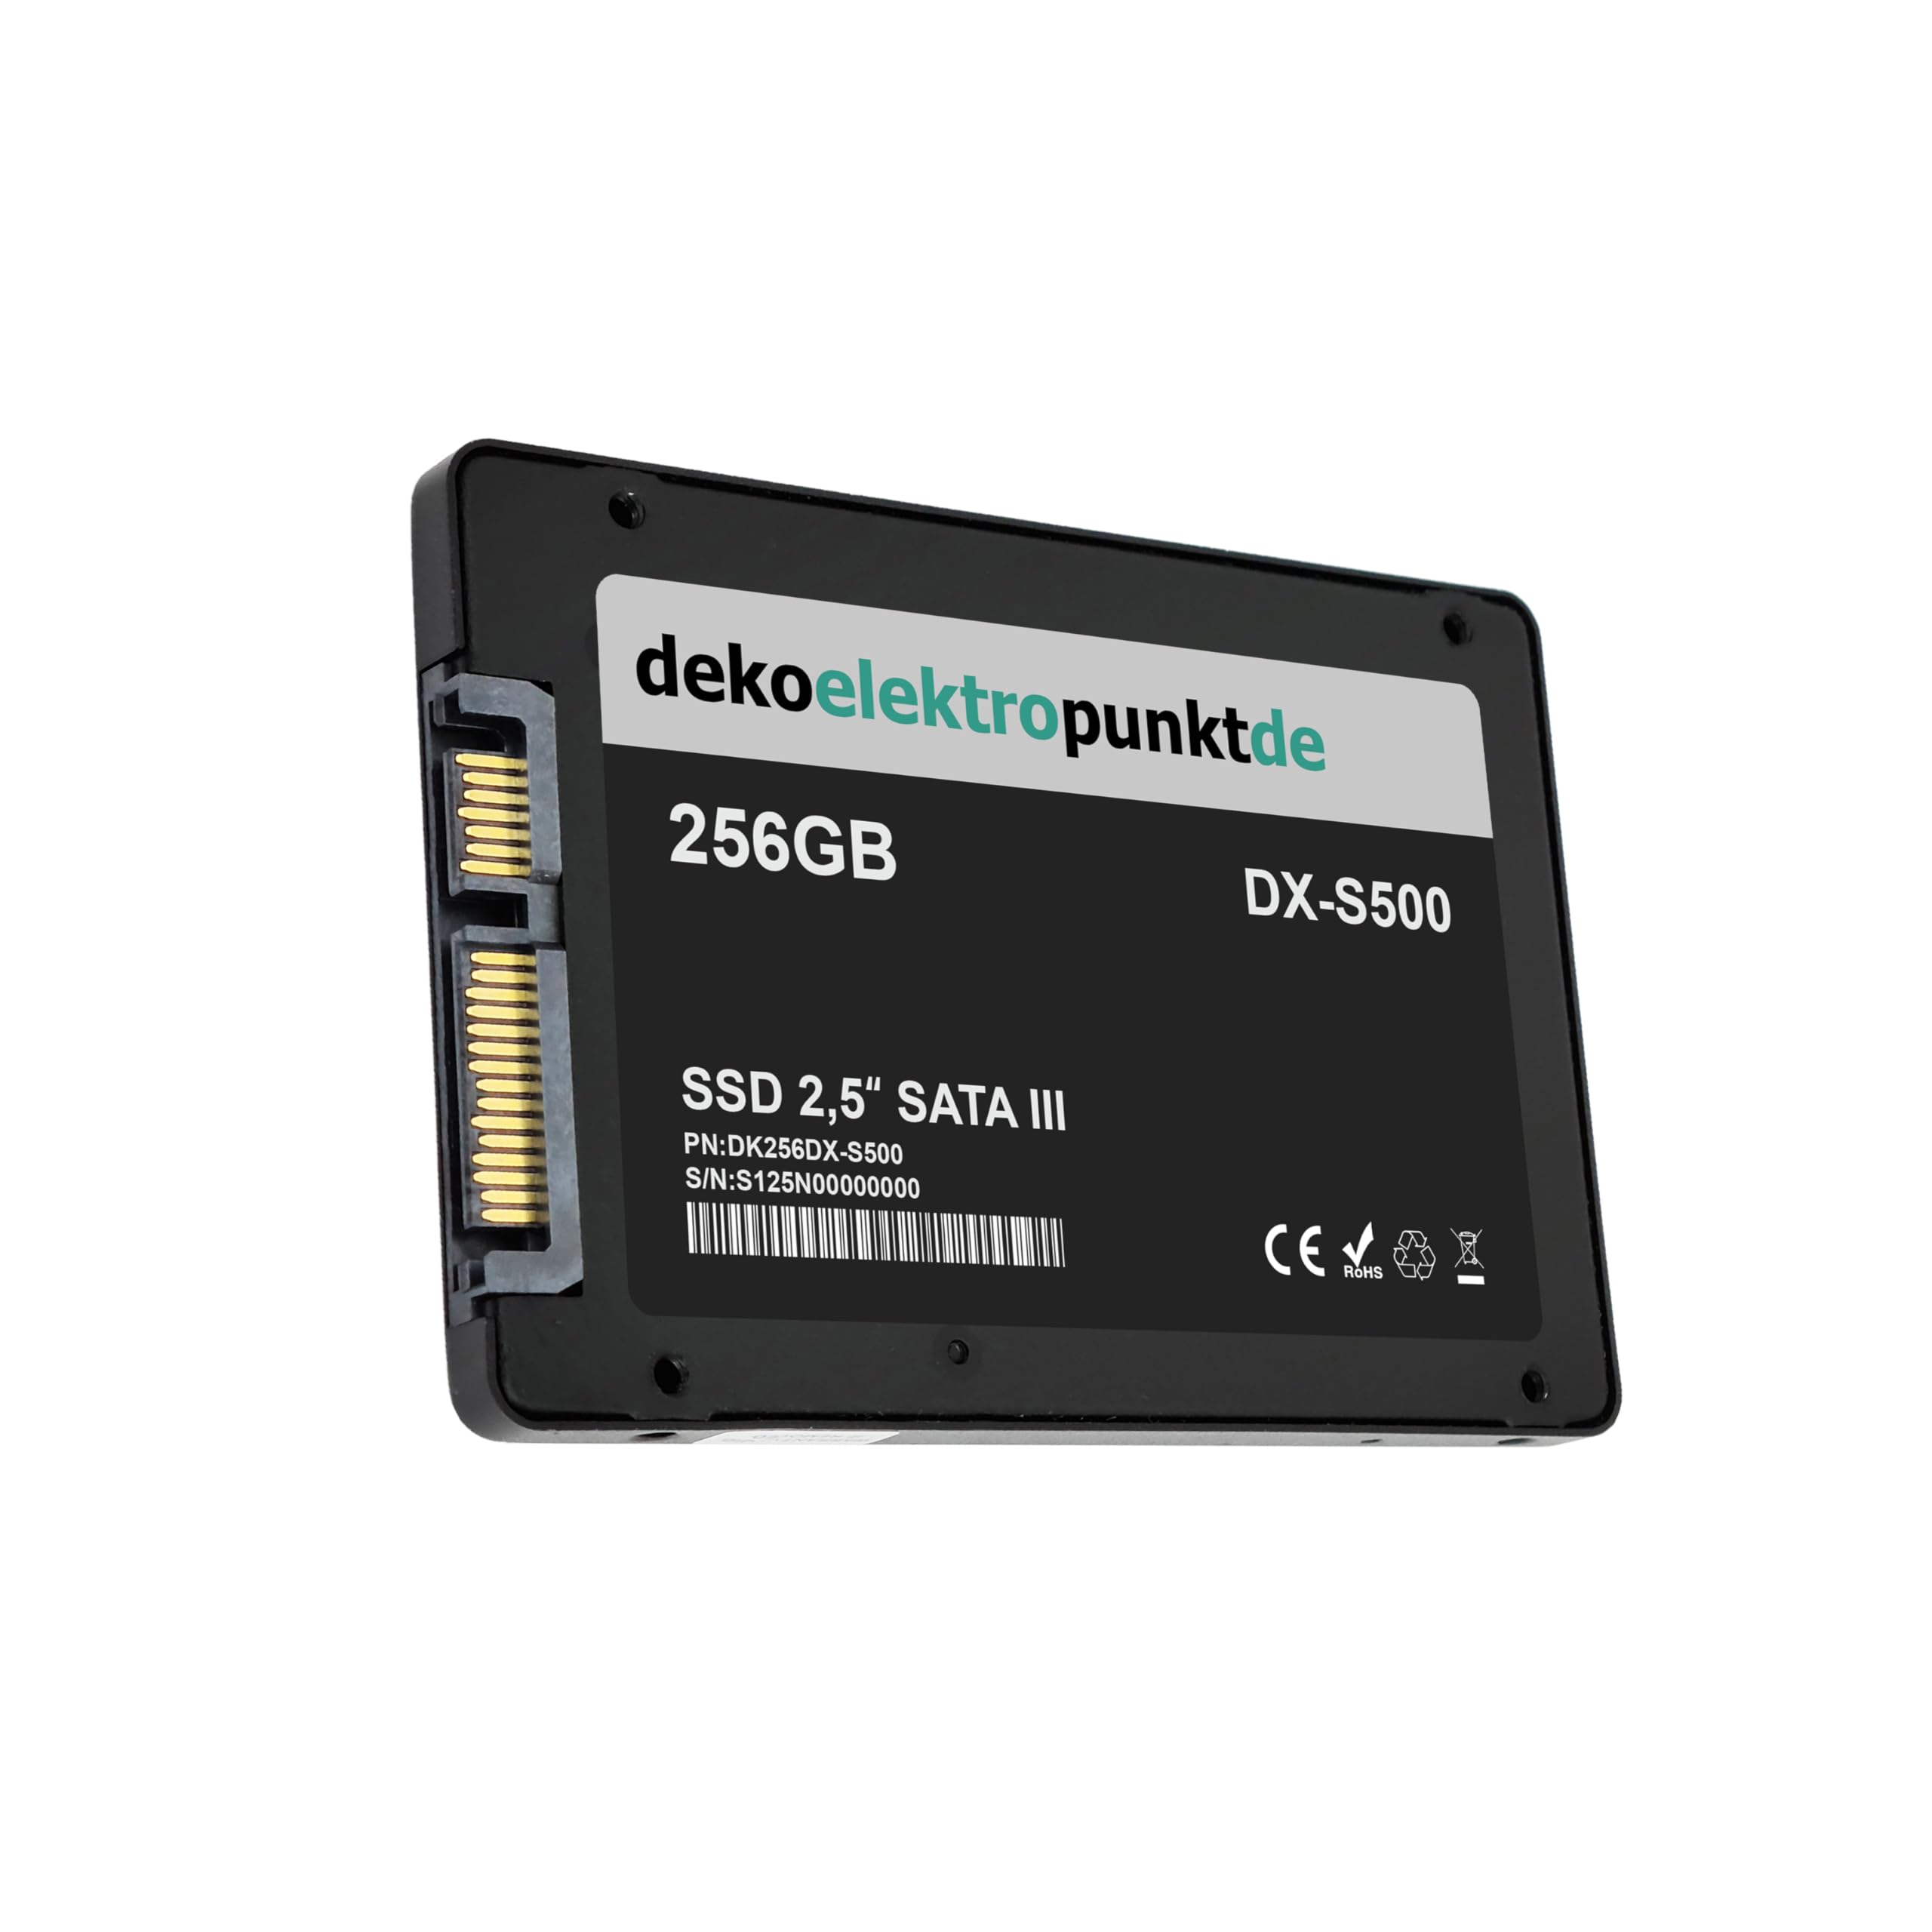 dekoelektropunktde 256GB SSD Festplatte kompatibel mit Asus Pro 52L-AP053C Pro 52L-AP102A Pro 52L-AP111A